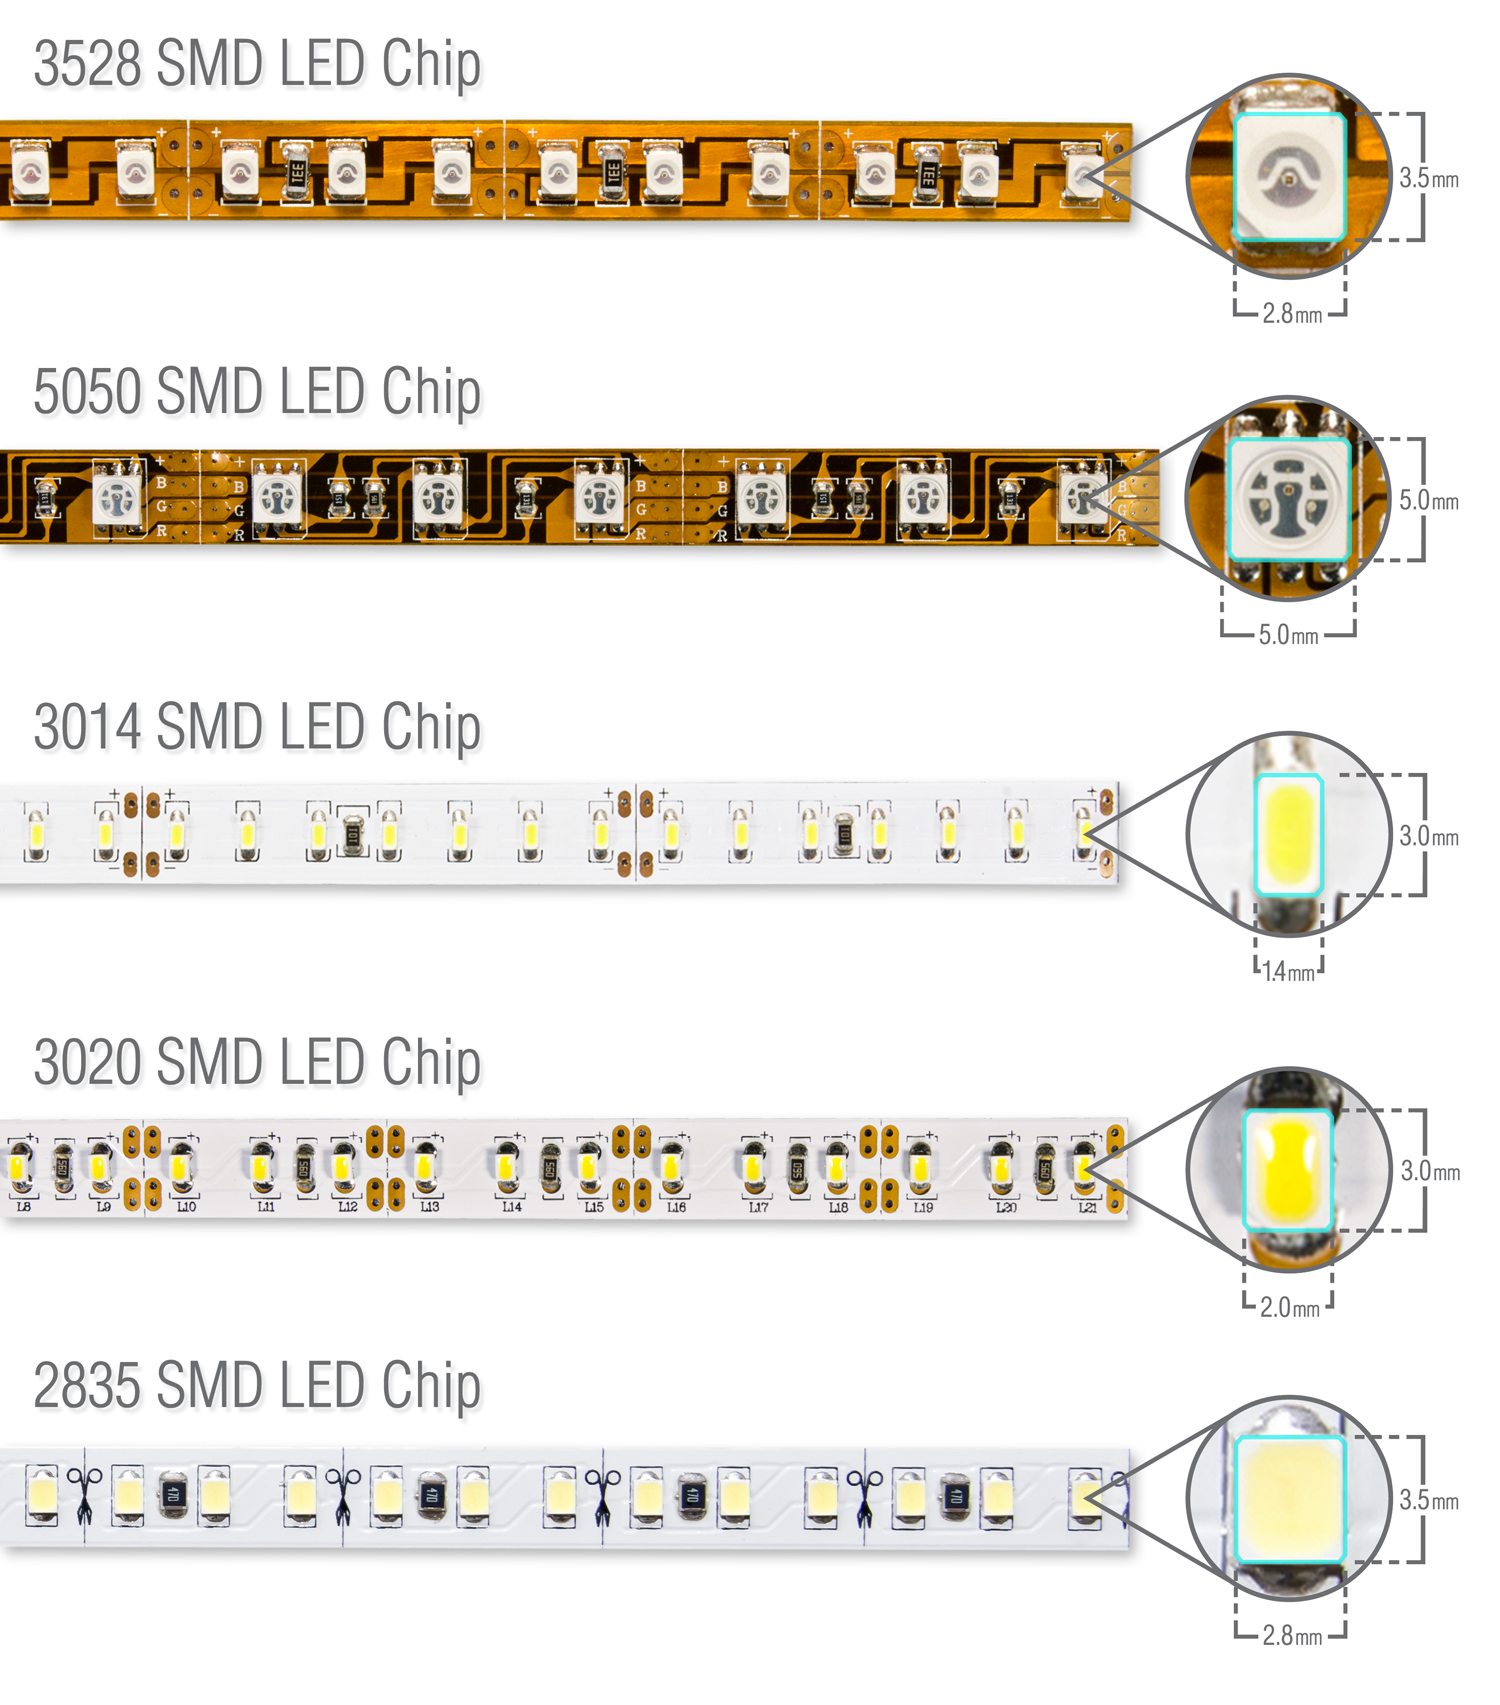 SMD-LED-comparison-5050-2835-3528-3014-Flexfireleds.jpg